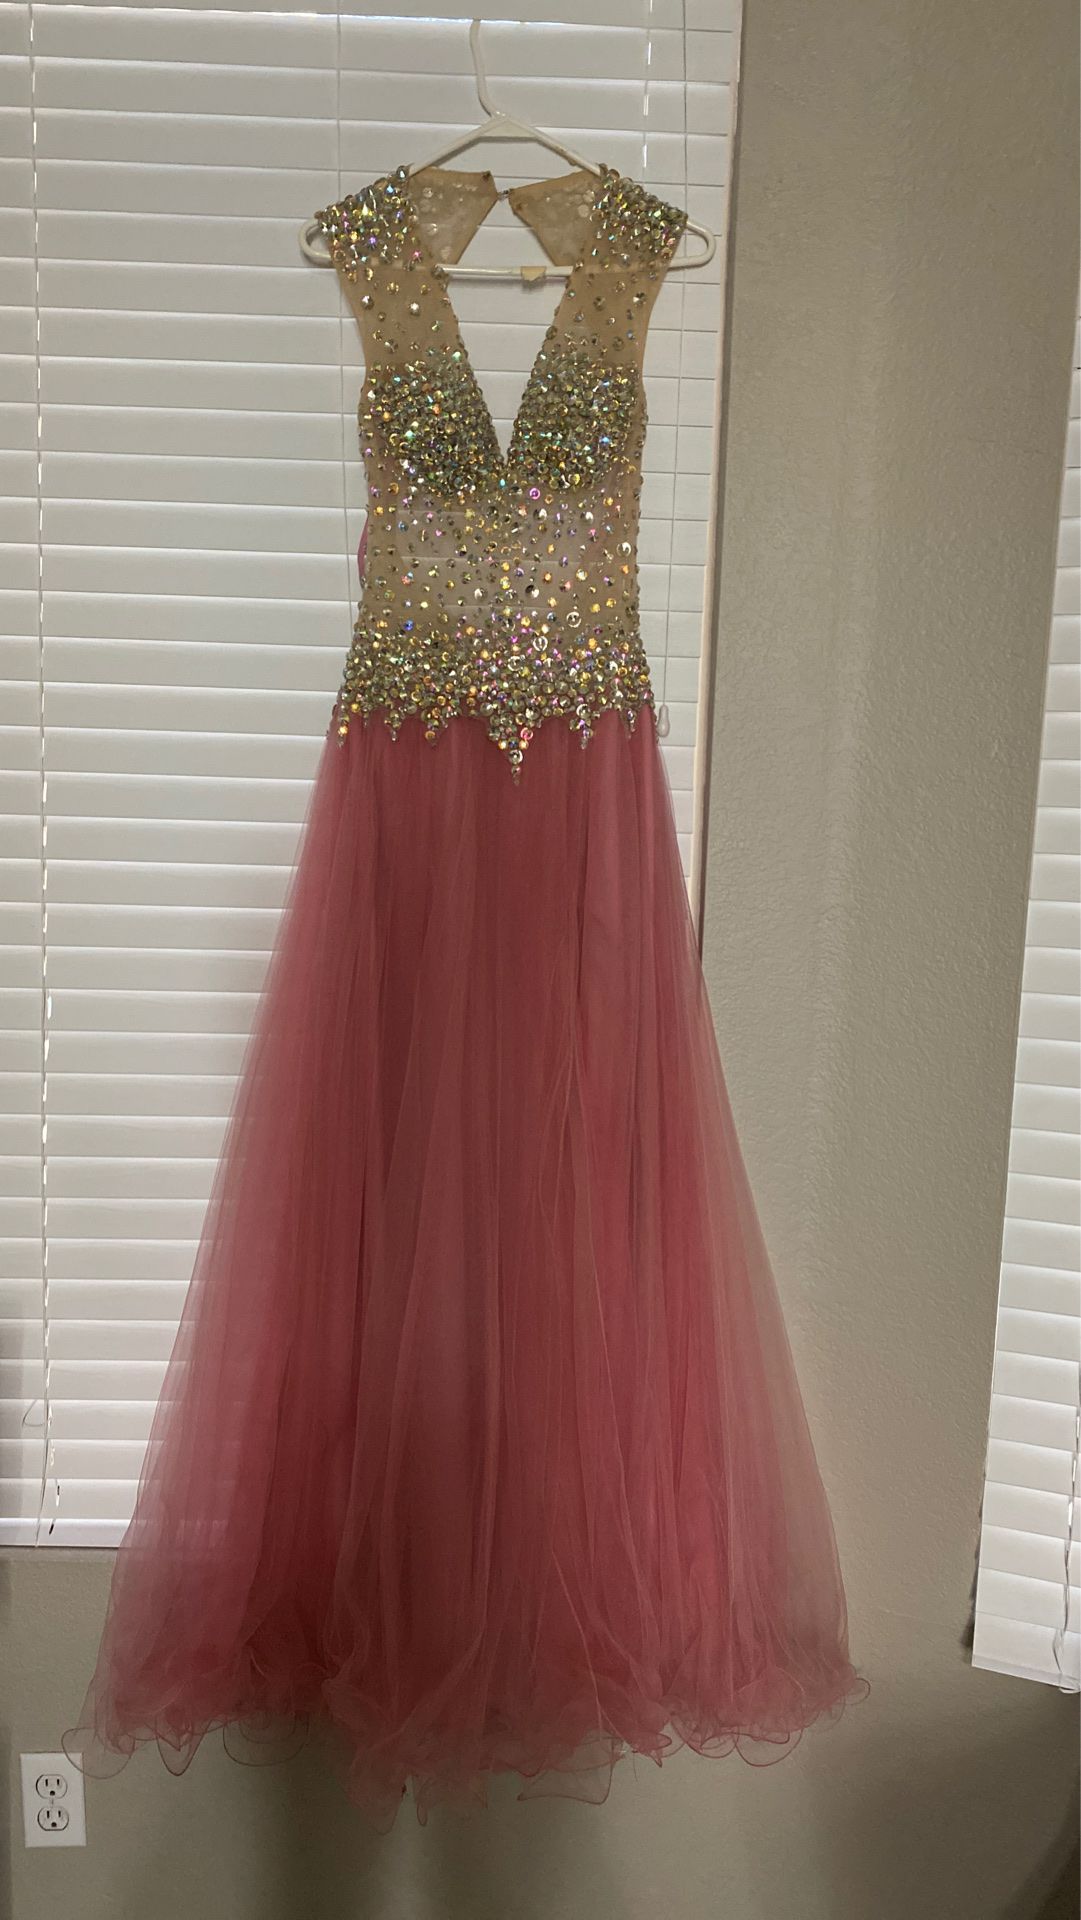 Blush prom dress